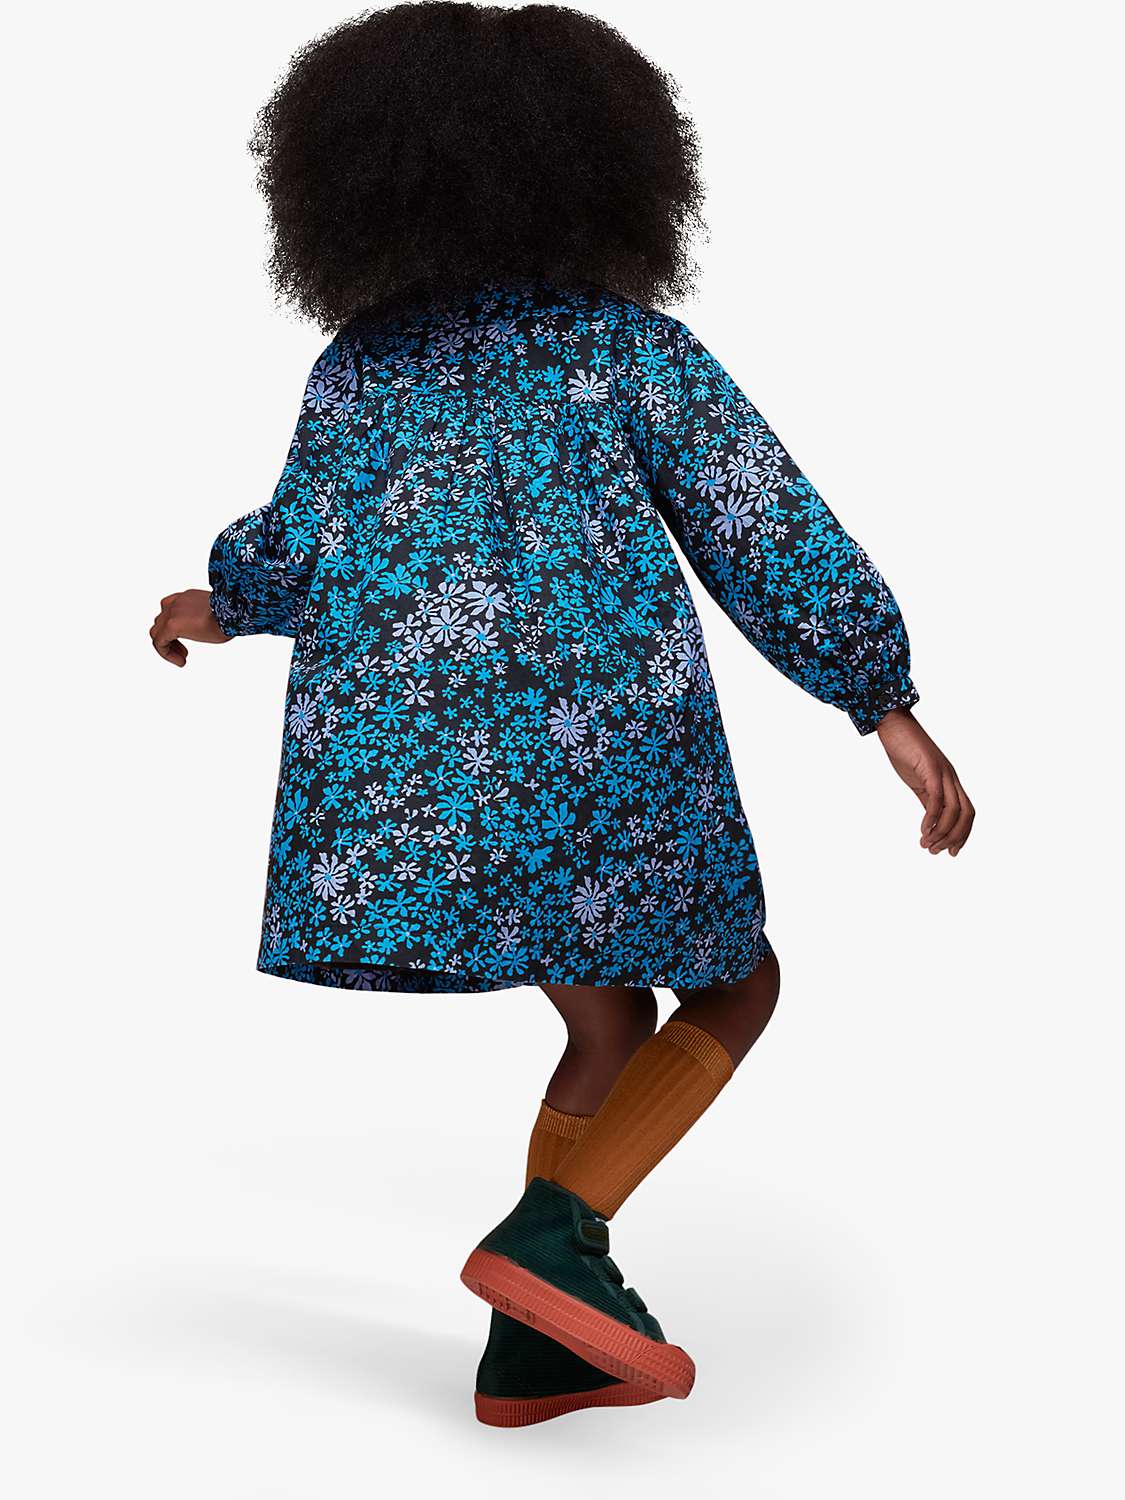 Buy Whistles Kids' Sofia Boho Floral Print Dress, Blue/Multi Online at johnlewis.com